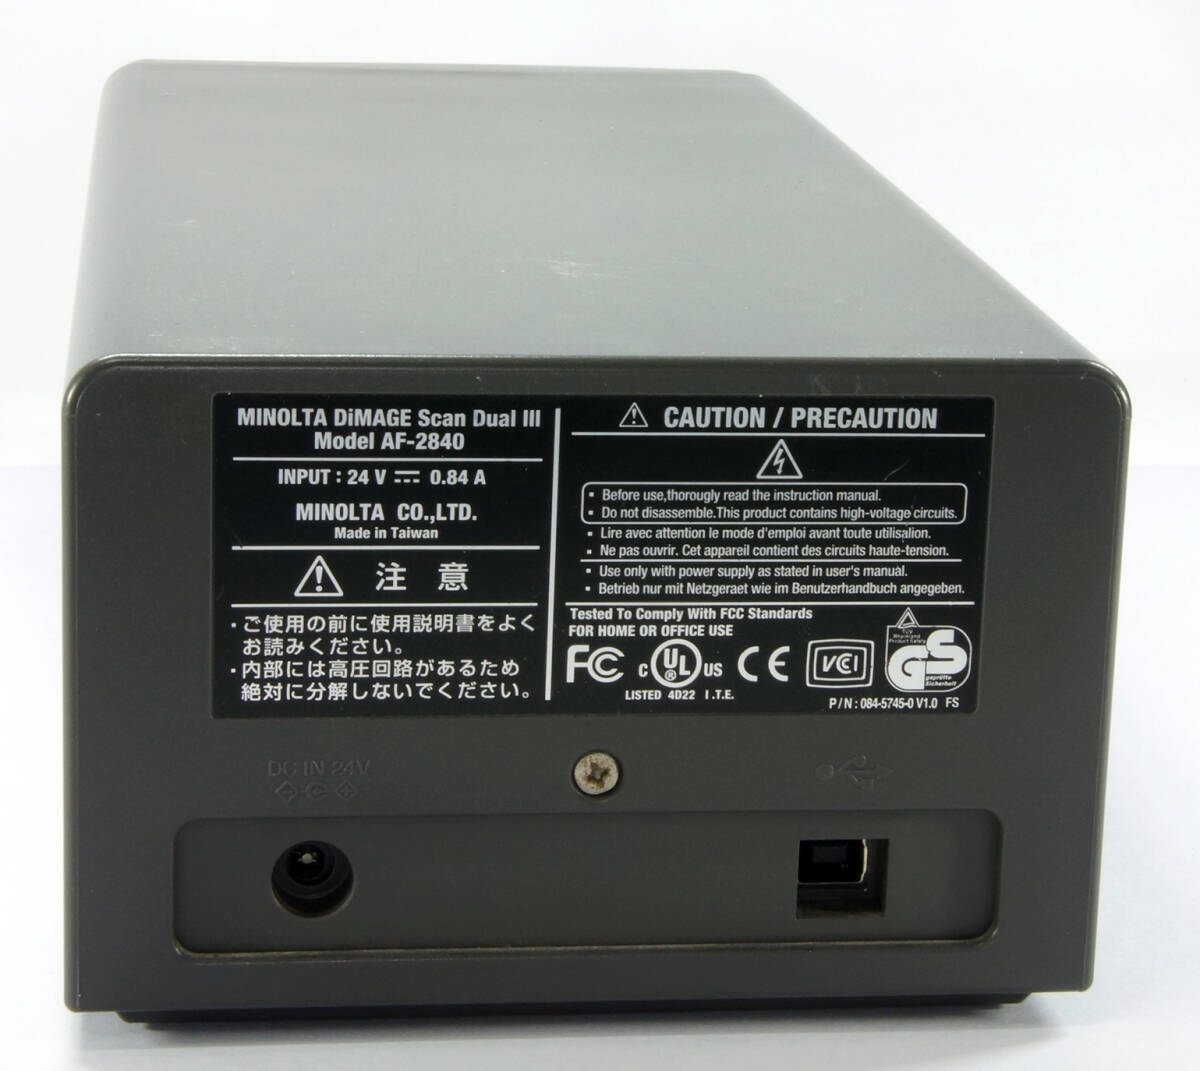 04-10[ junk ] Minolta DIMAGE Scan Duall III MODEL AF-2840